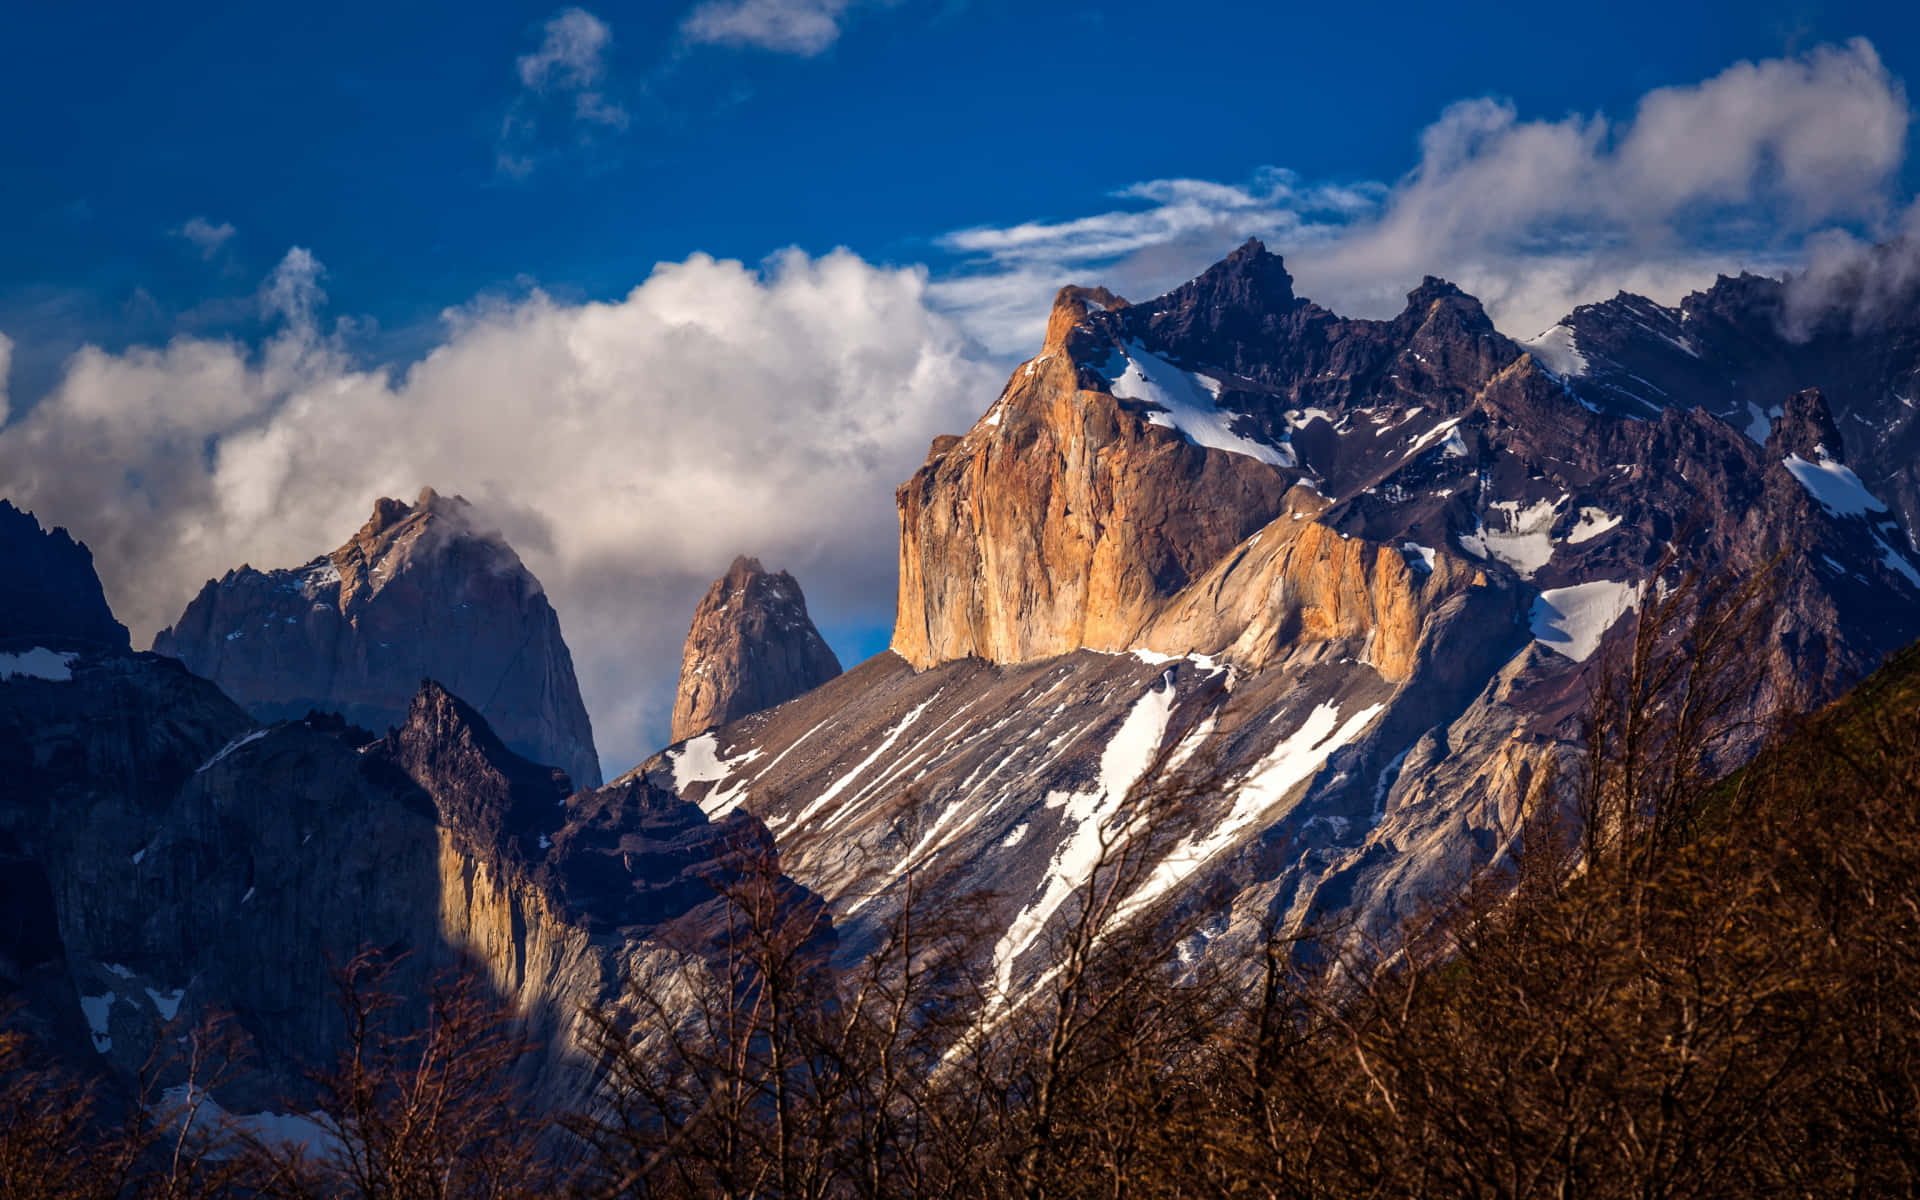 Explore Patagonia's stunning landscape